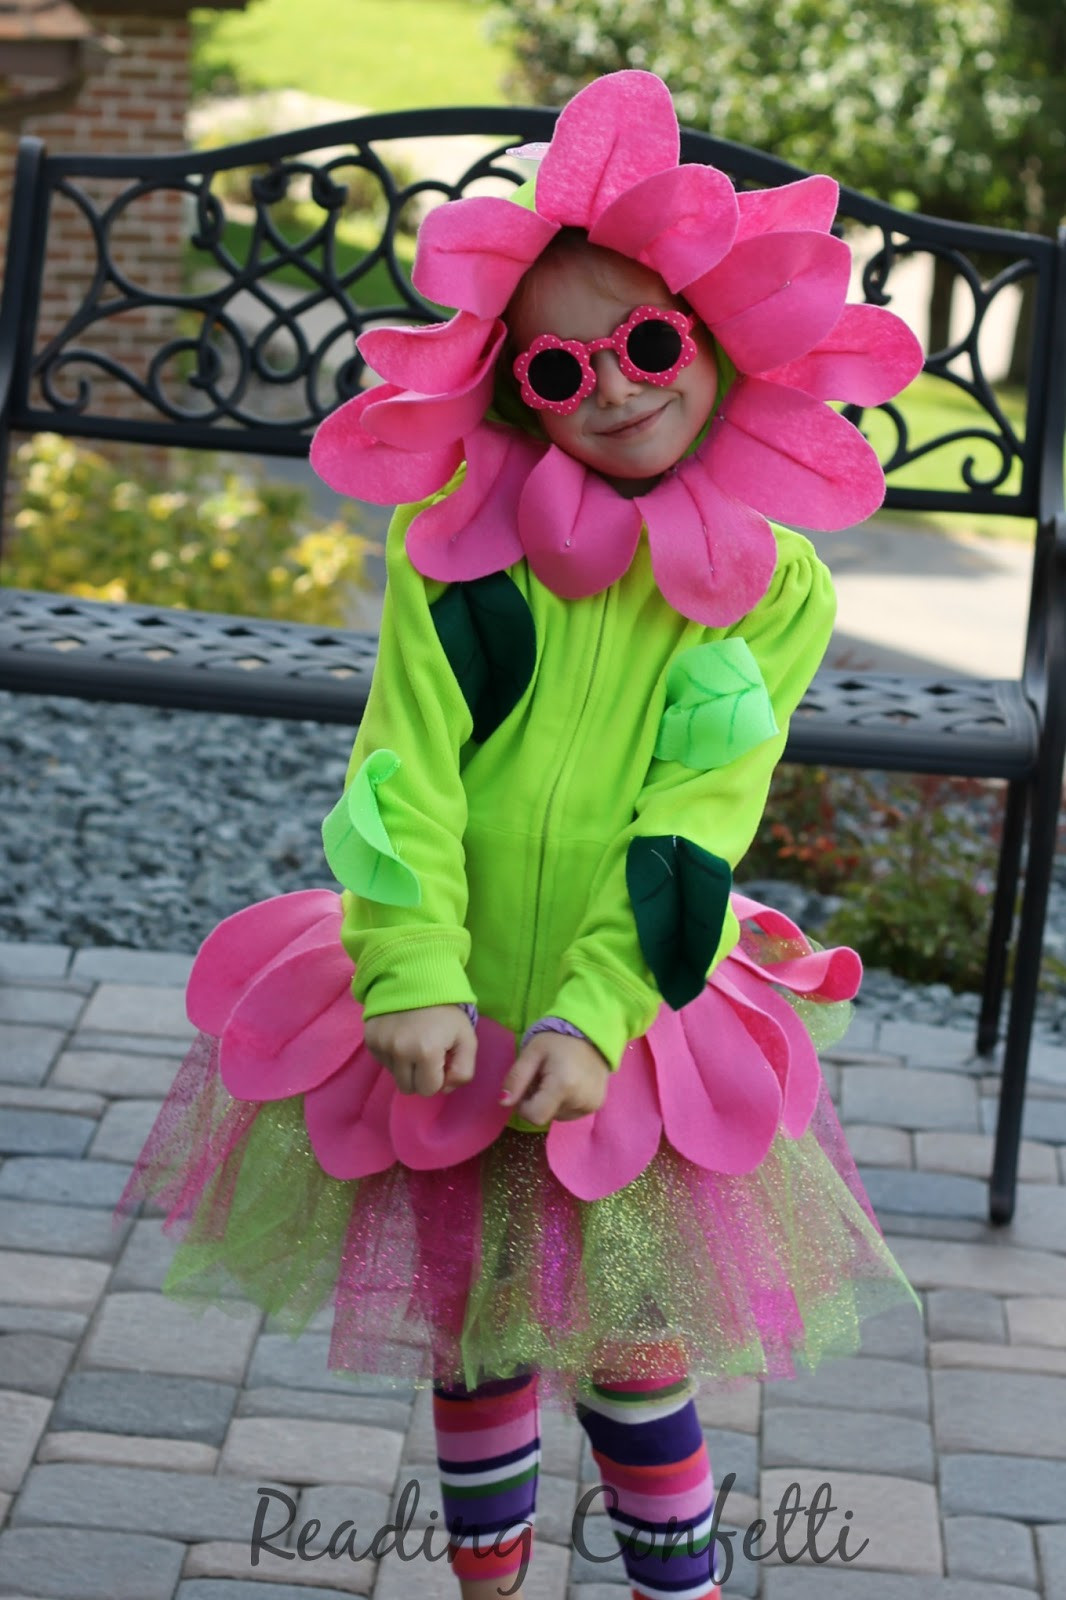 Flower Halloween Costume For Toddler
 DIY Flower Costume Reading Confetti